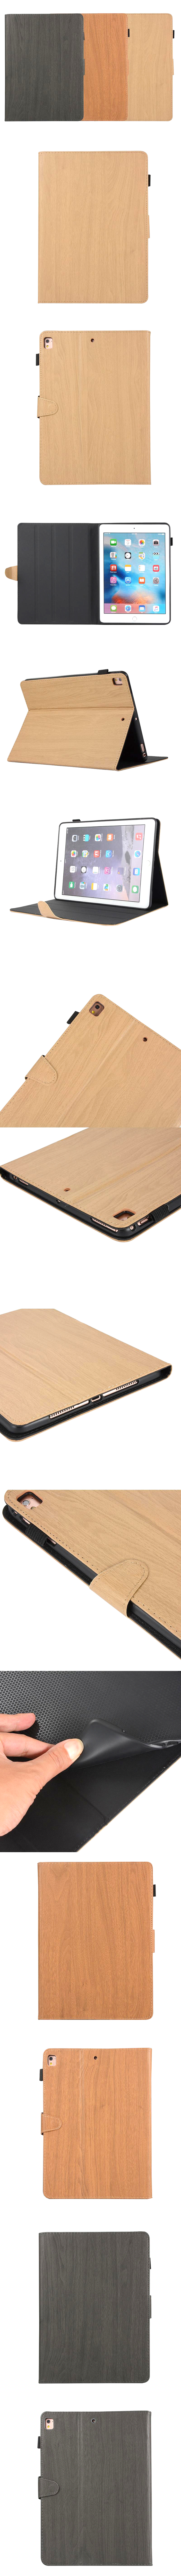 360-IPad-經典木紋扣帶式翻蓋皮套平板套保護套